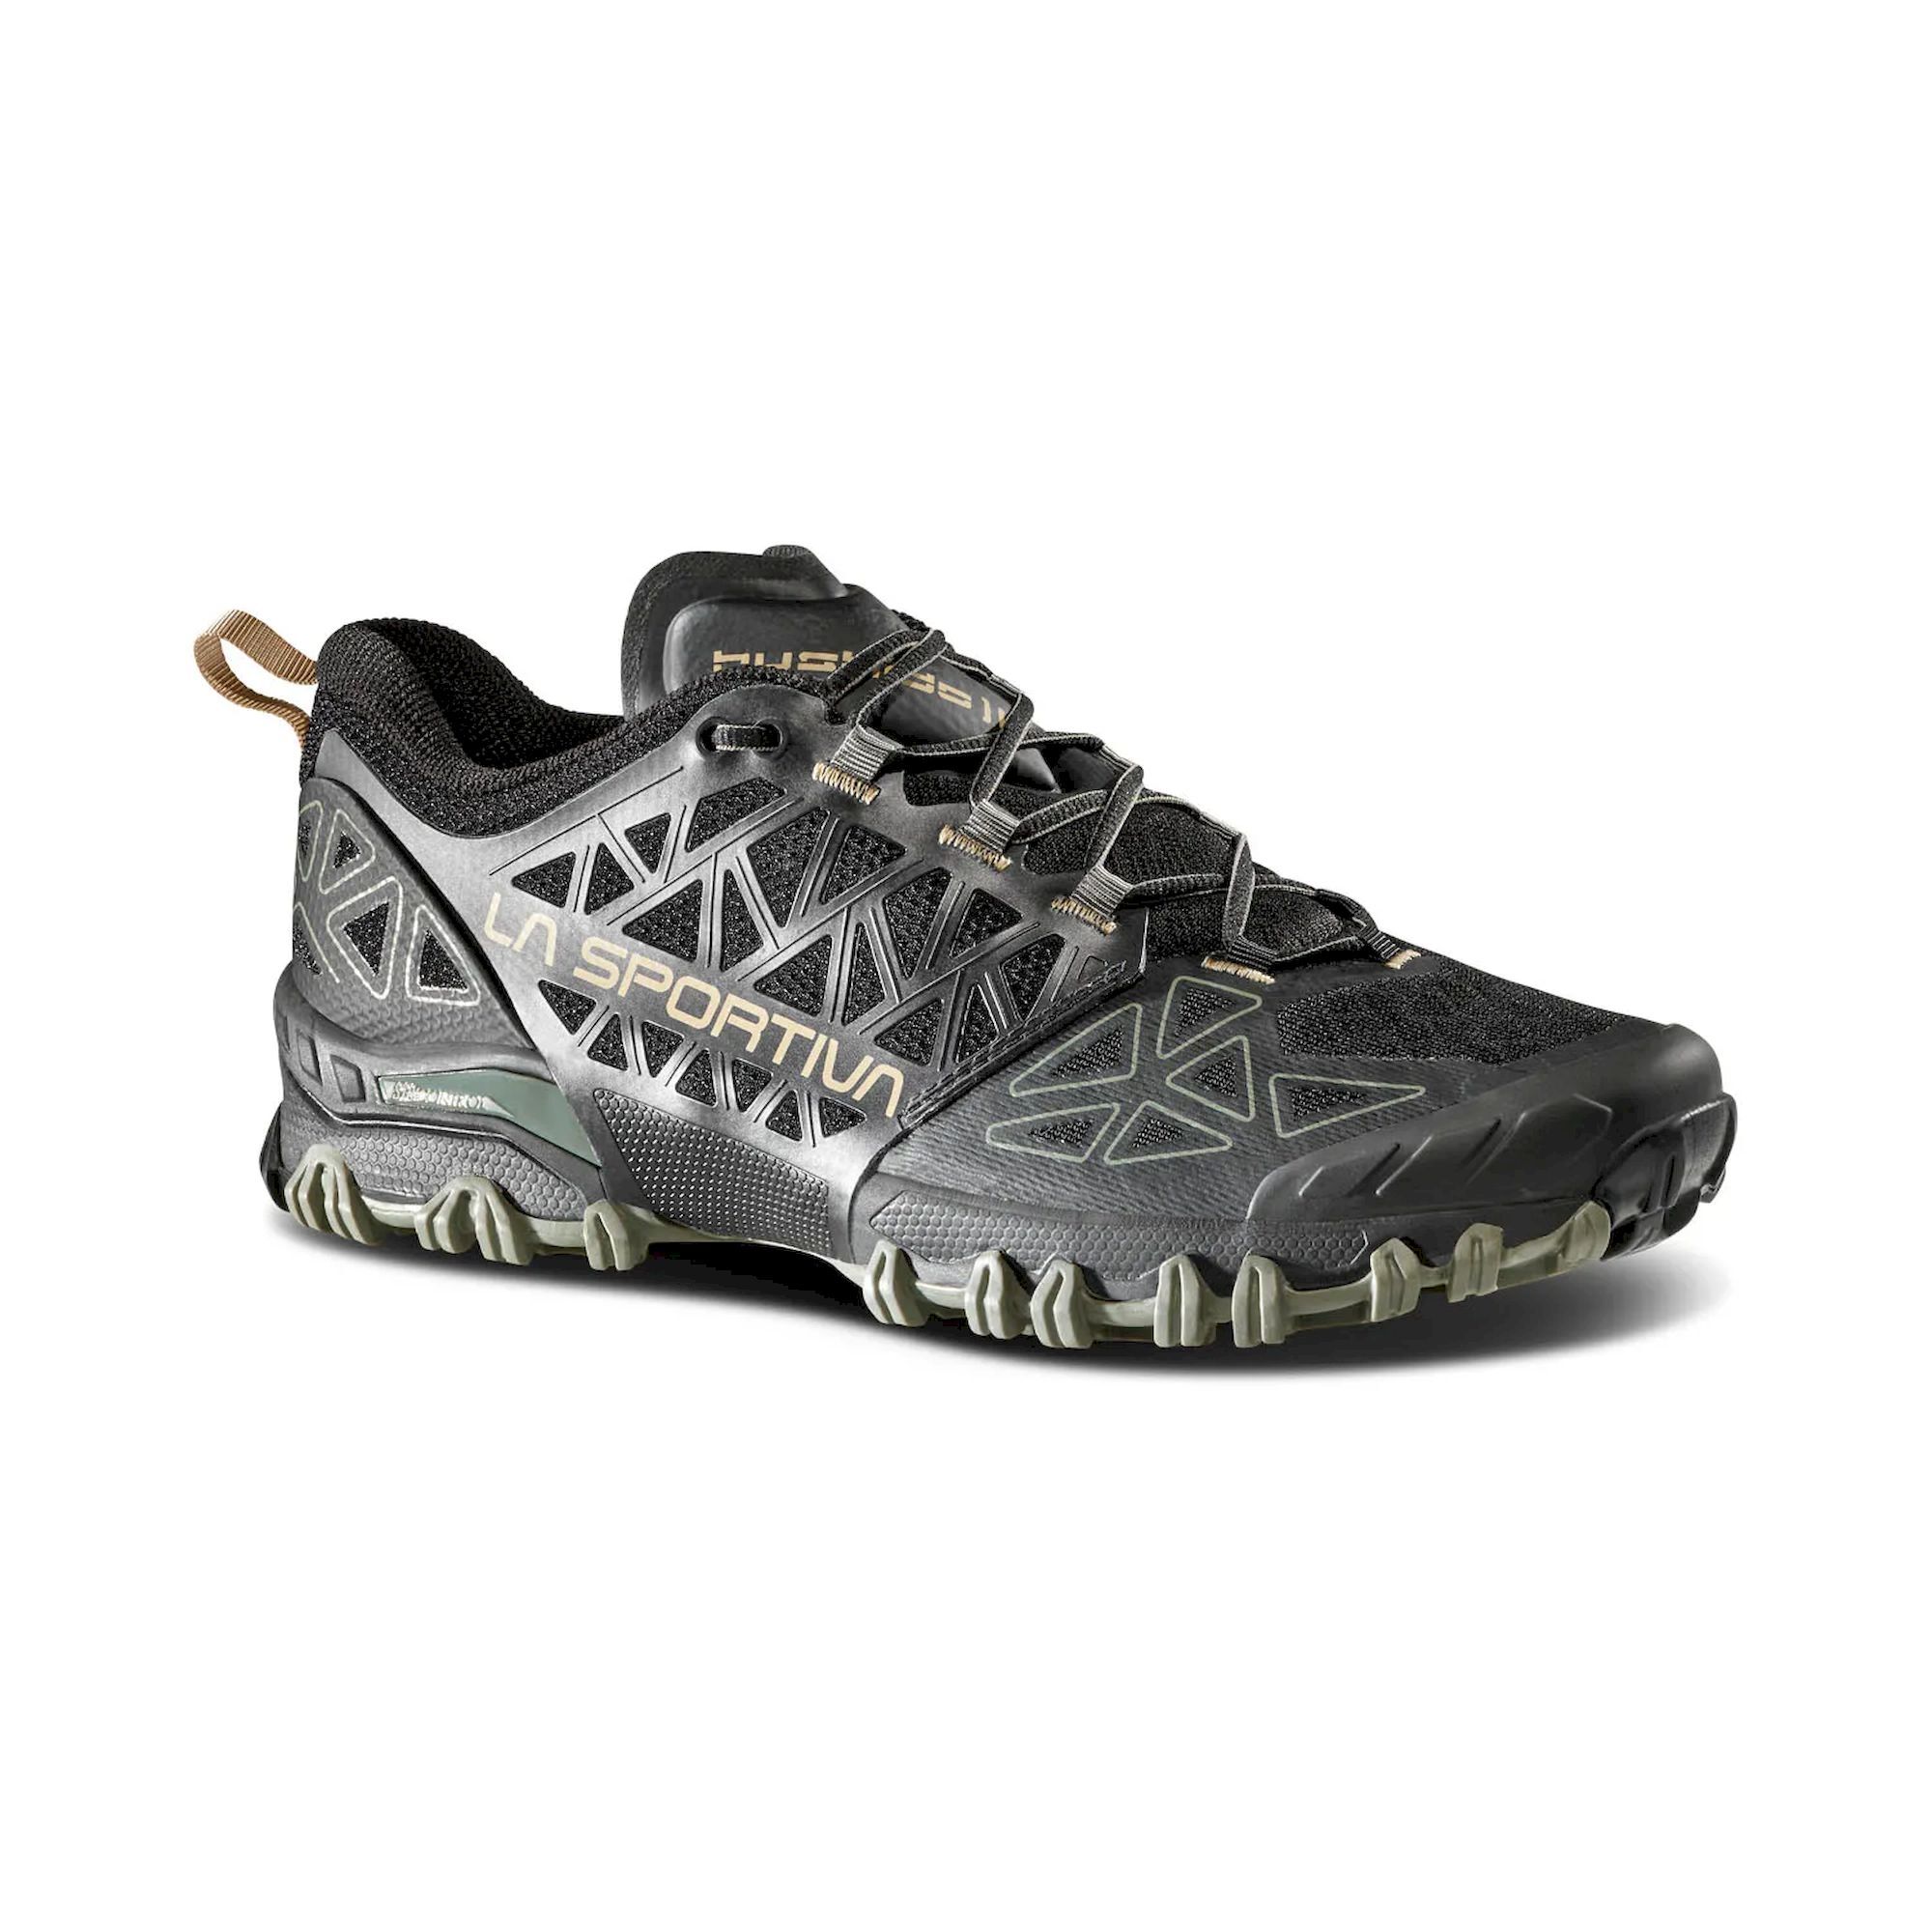 La Sportiva - Bushido II - Trail running shoes - Men's